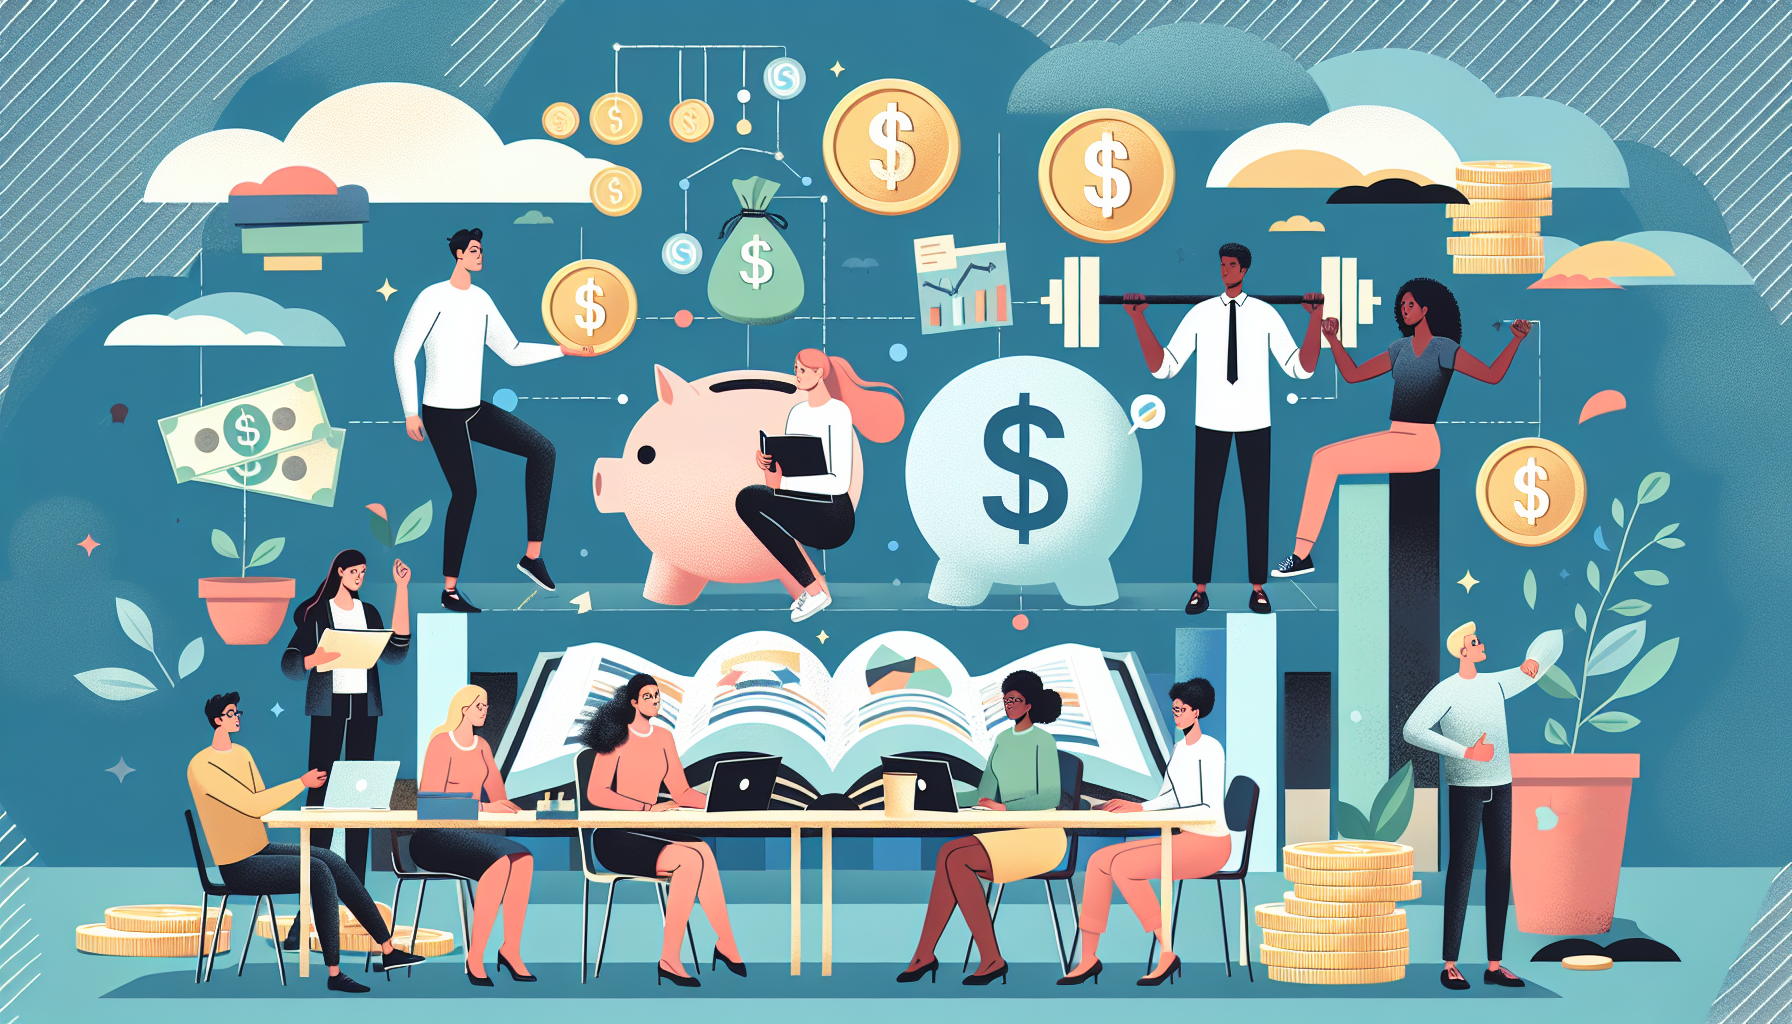 Illustration of financial wellness education